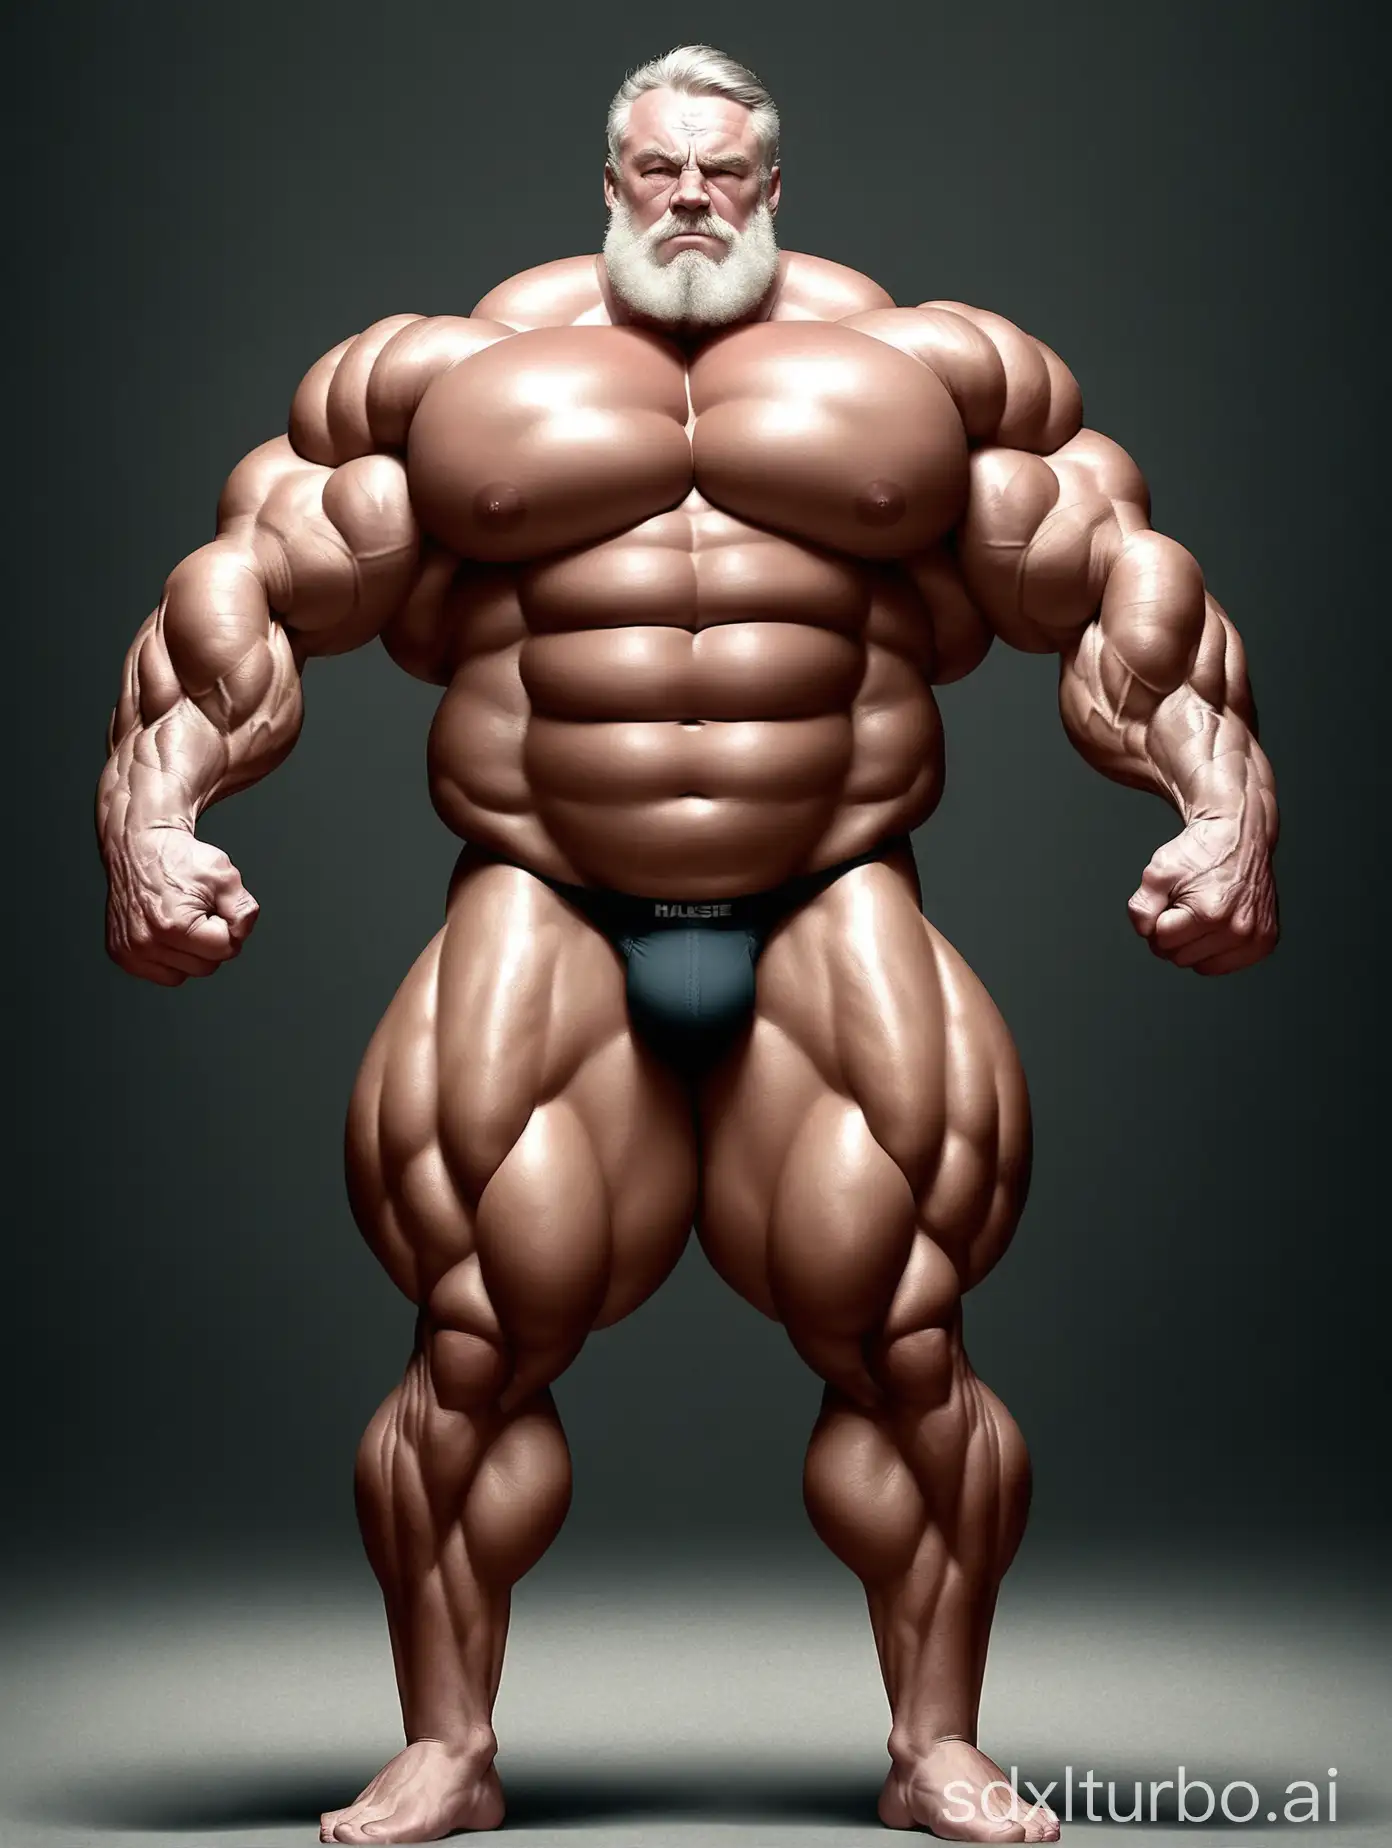 Giant-Bodybuilder-Flexing-Massive-Muscles-in-Underwear